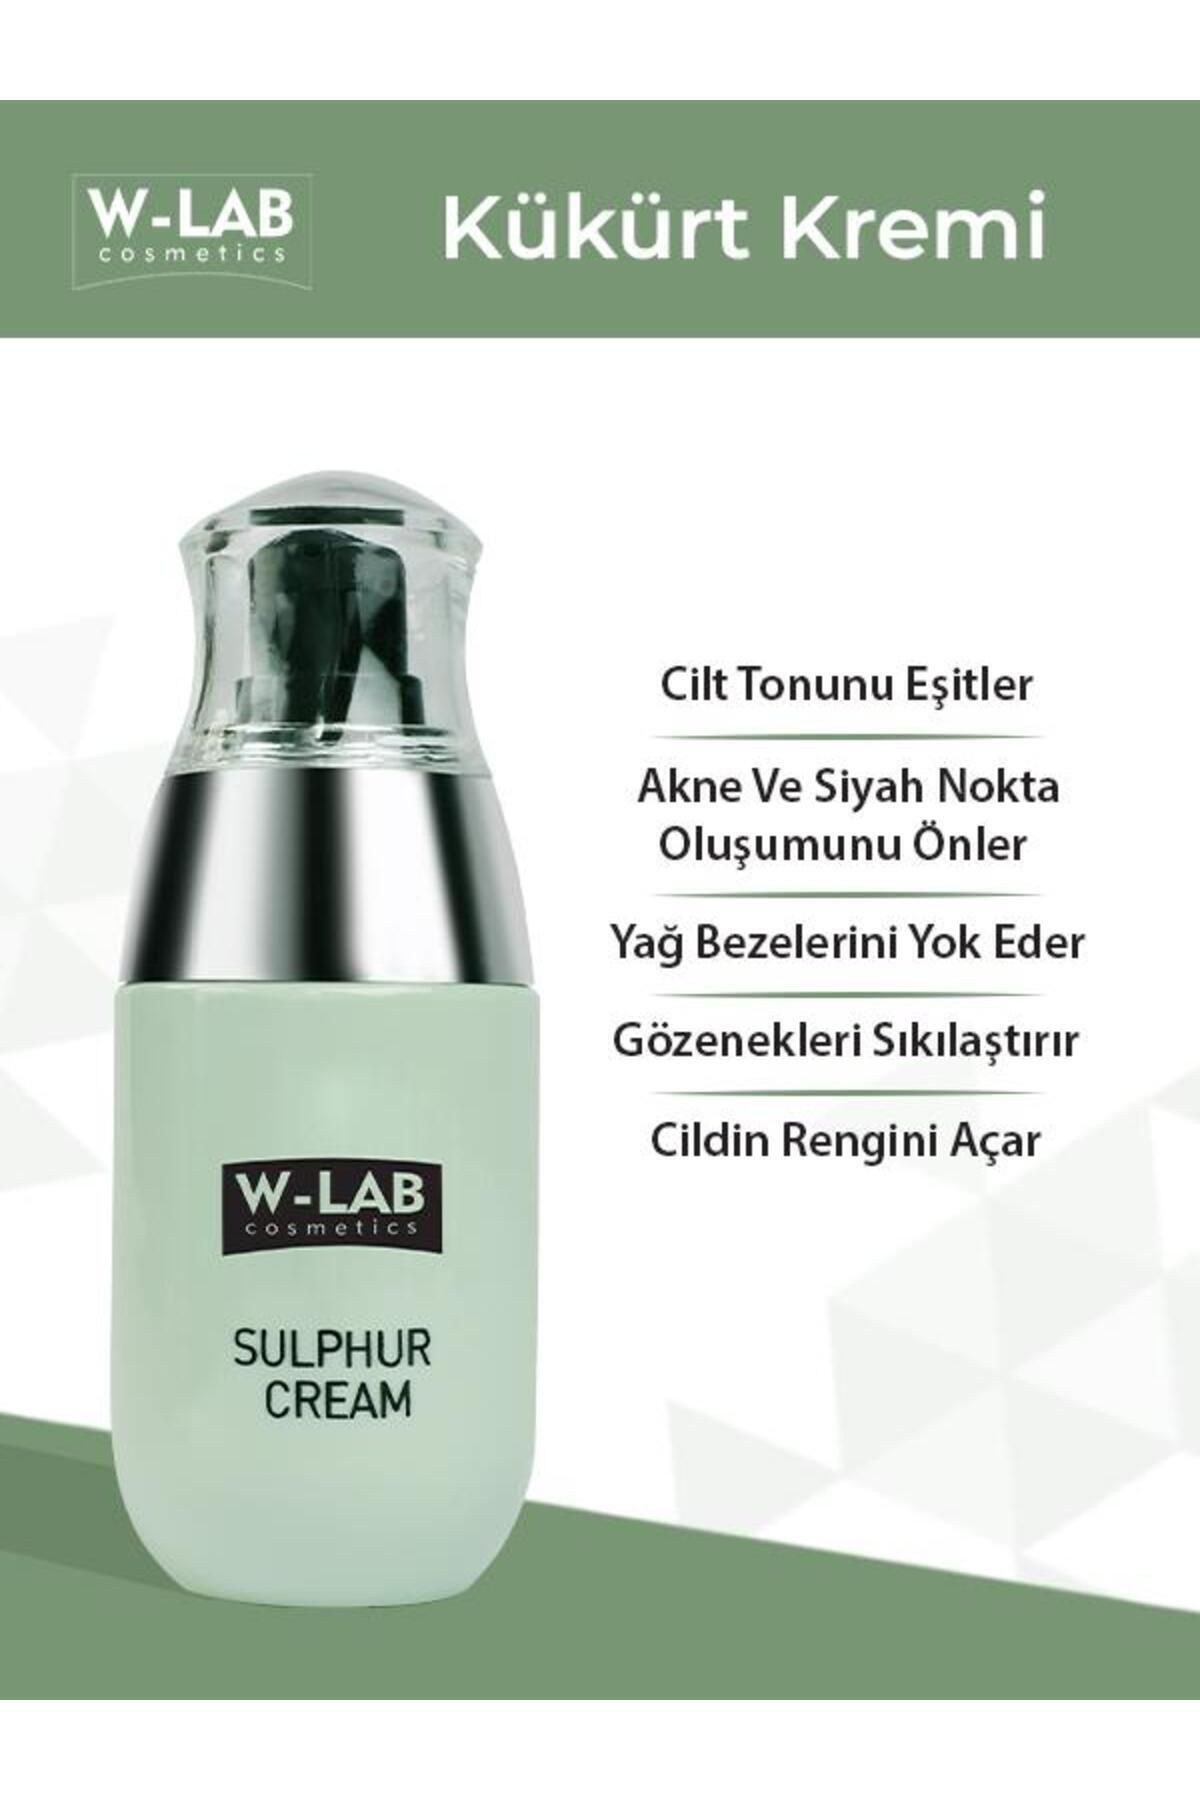 W-Lab Kozmetik Kükürt Kremi